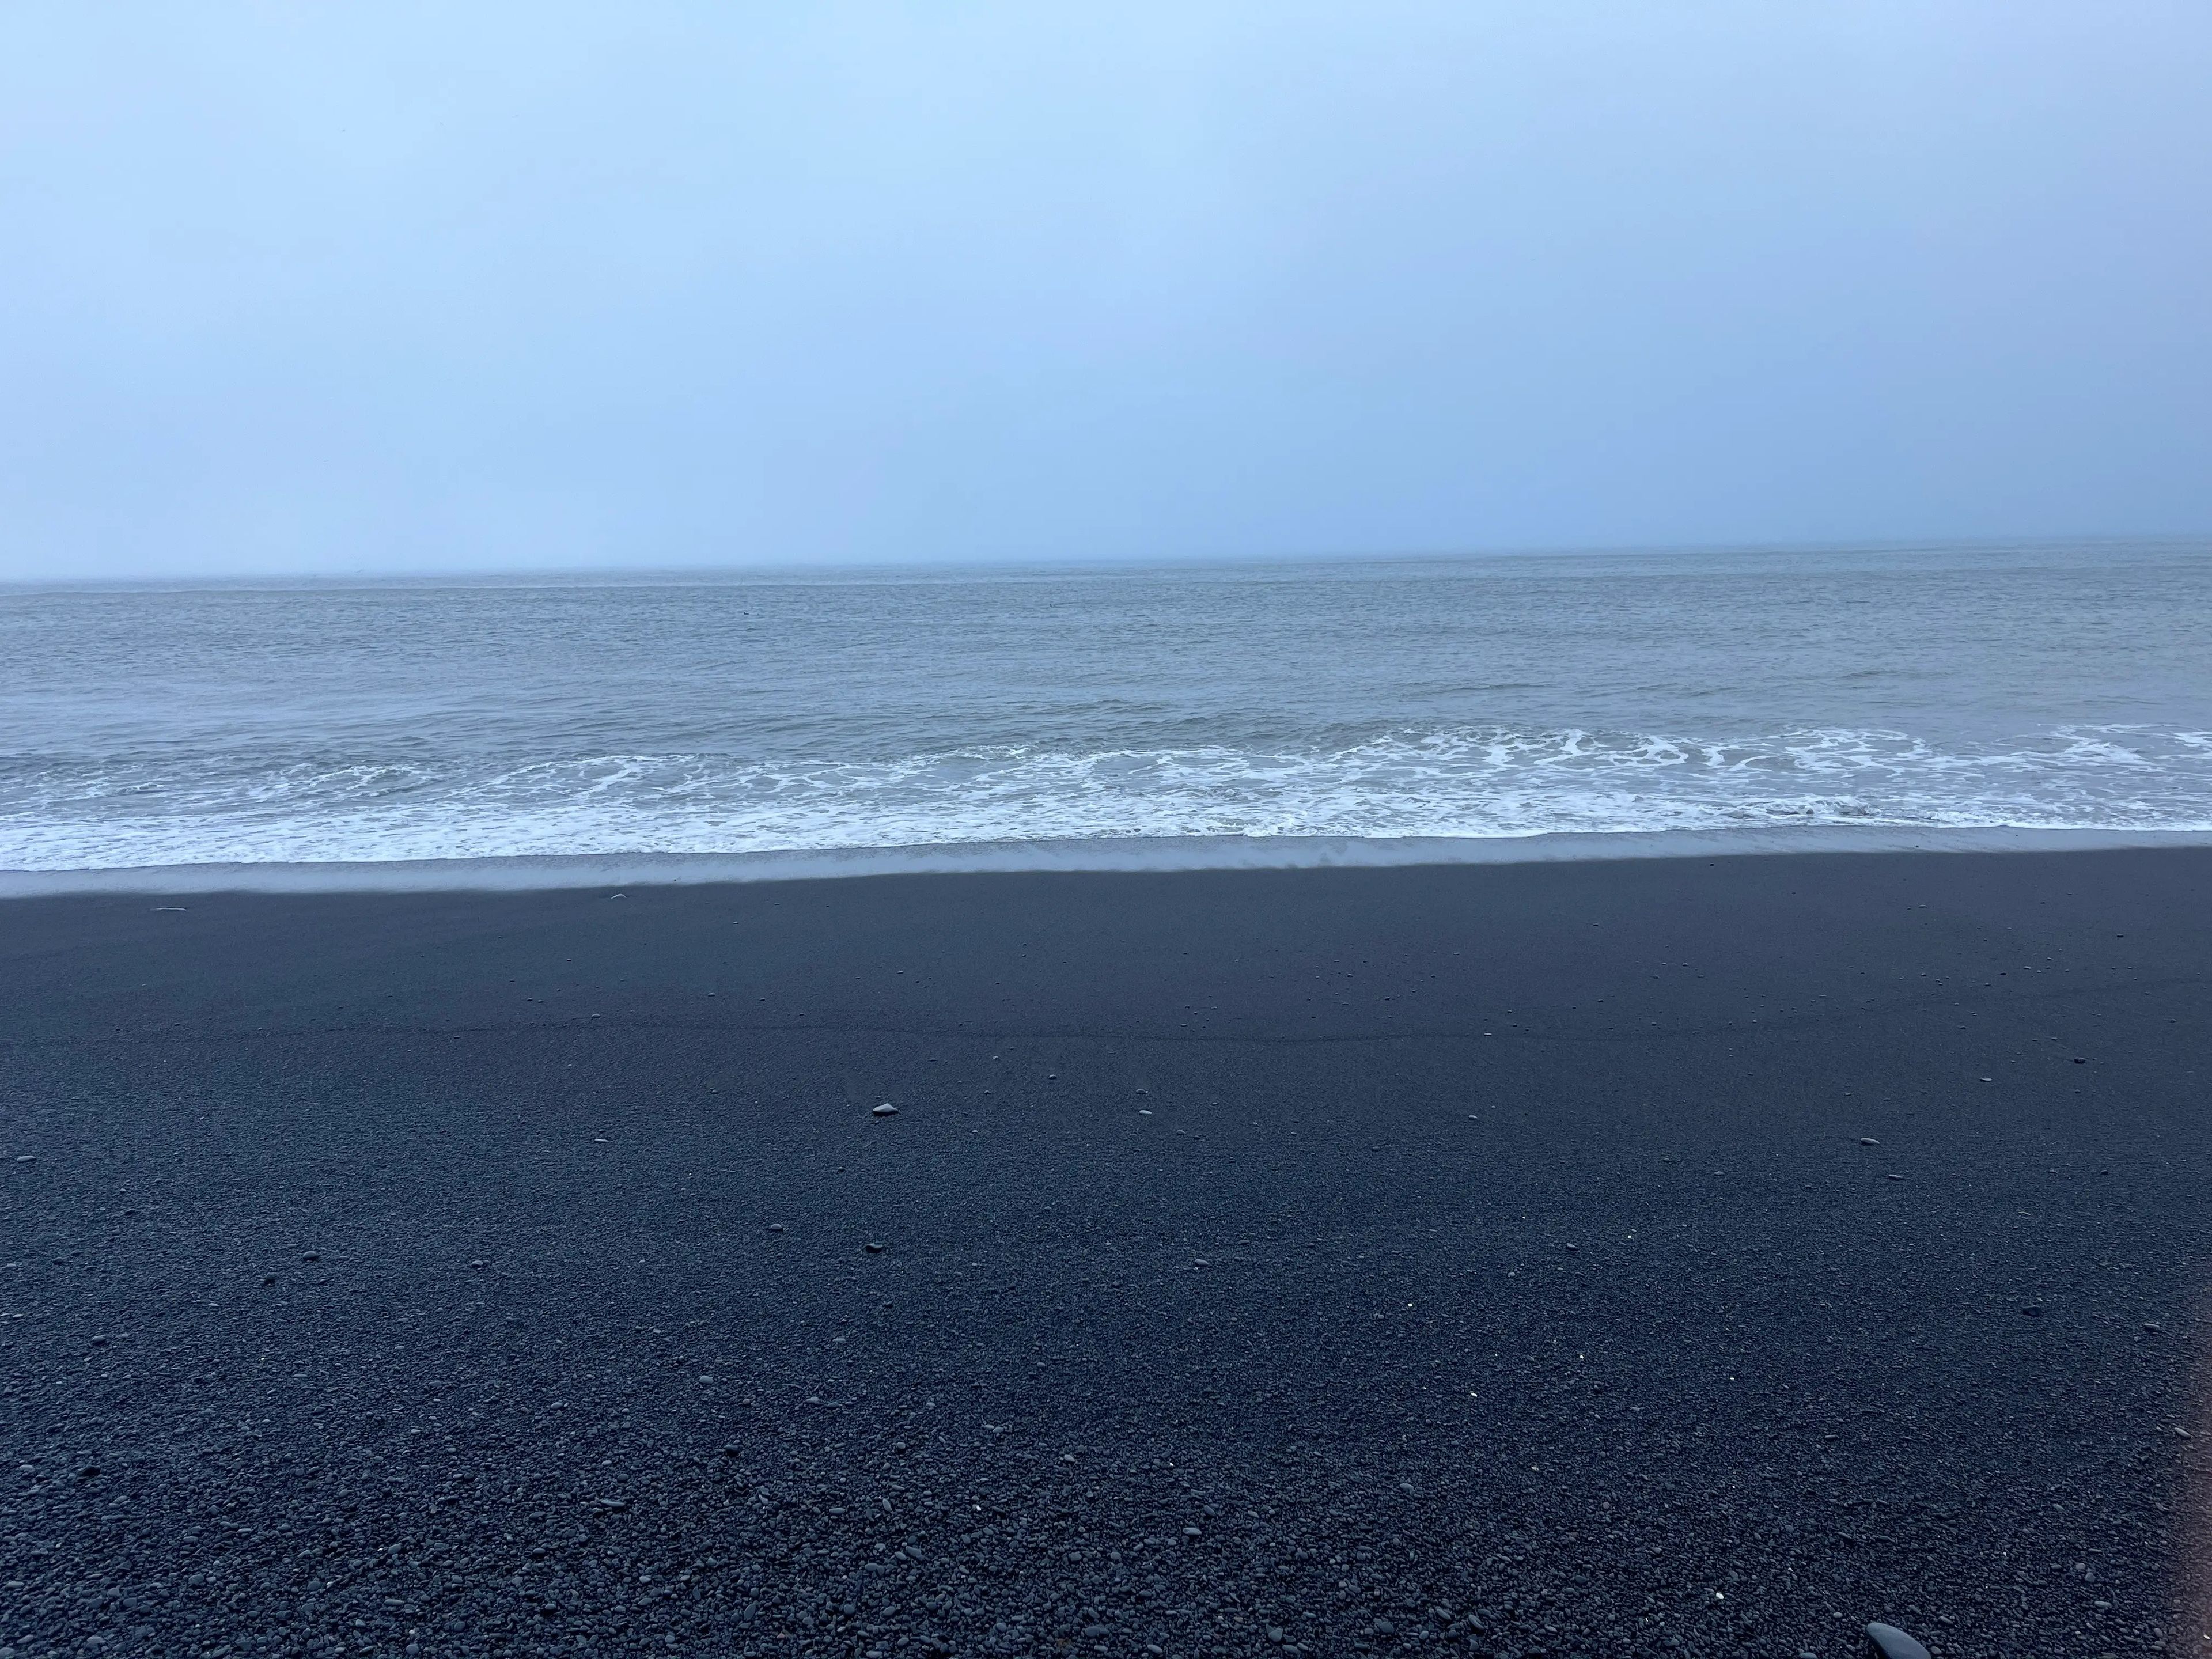 Víkurfjara, a black sand beach in Iceland